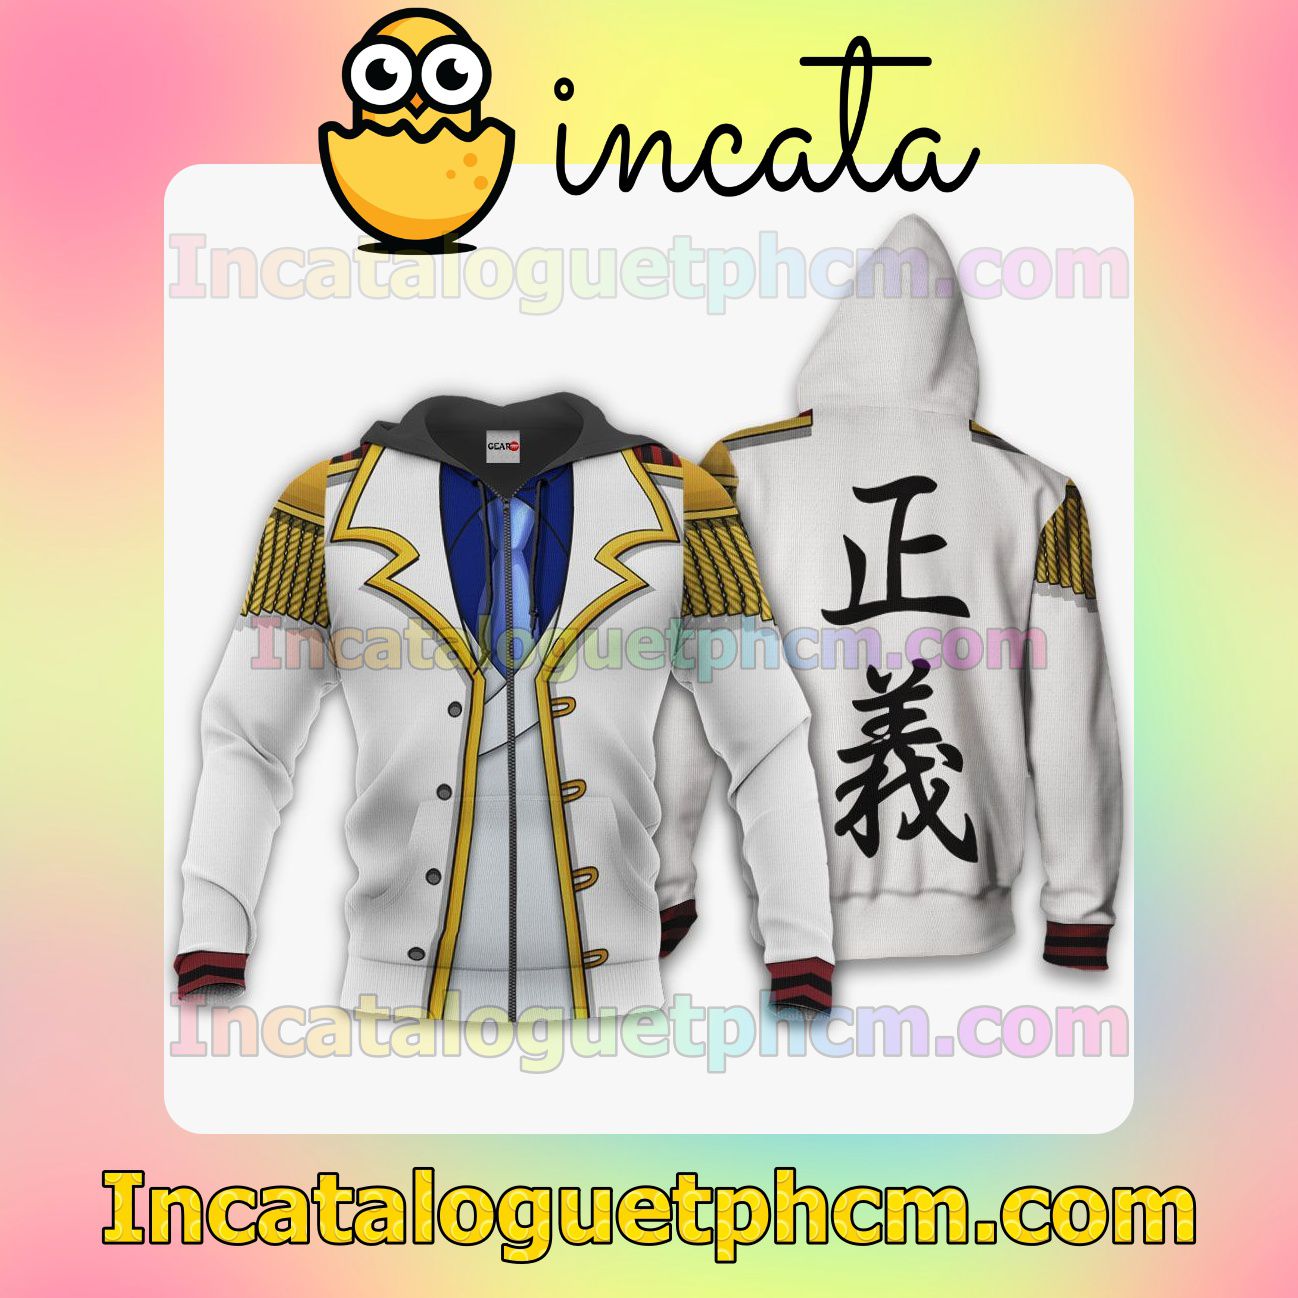 One Piece Monkey D Garp Uniform Anime Clothing Merch Zip Hoodie Jacket Shirts